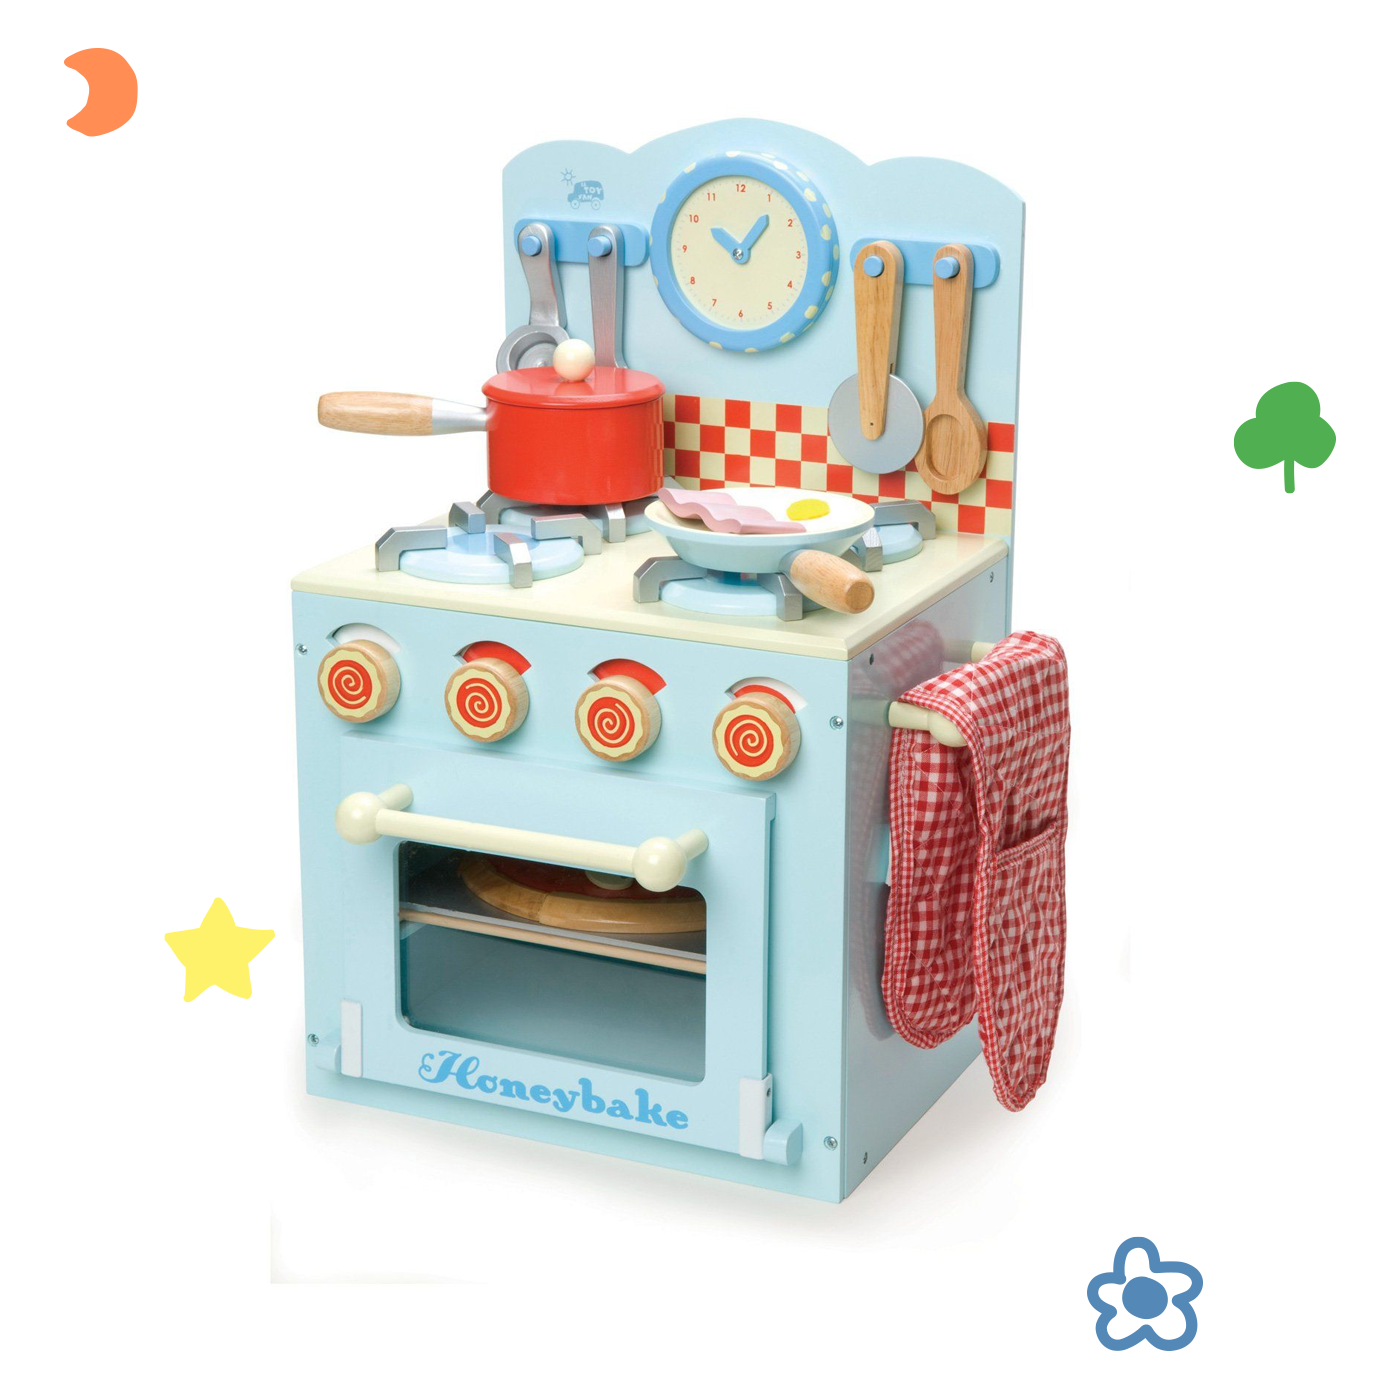 Le Toy Van Wooden Honeybake Oven & Hob Kitchen, wooden toys, toy box club, blue kitchen